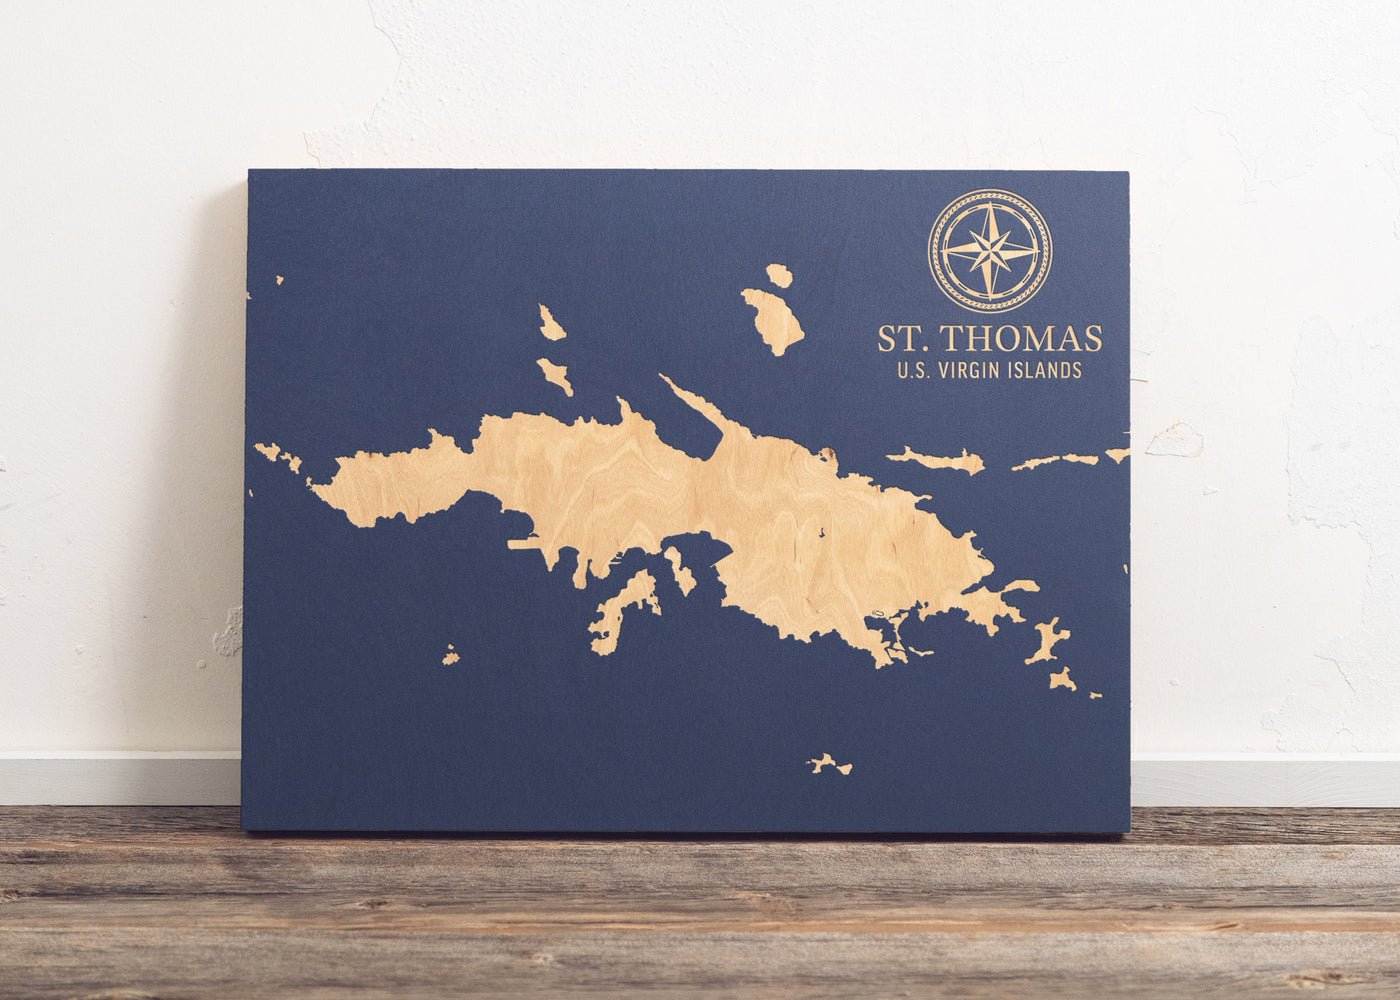 St Thomas, U.S. Virgin Islands